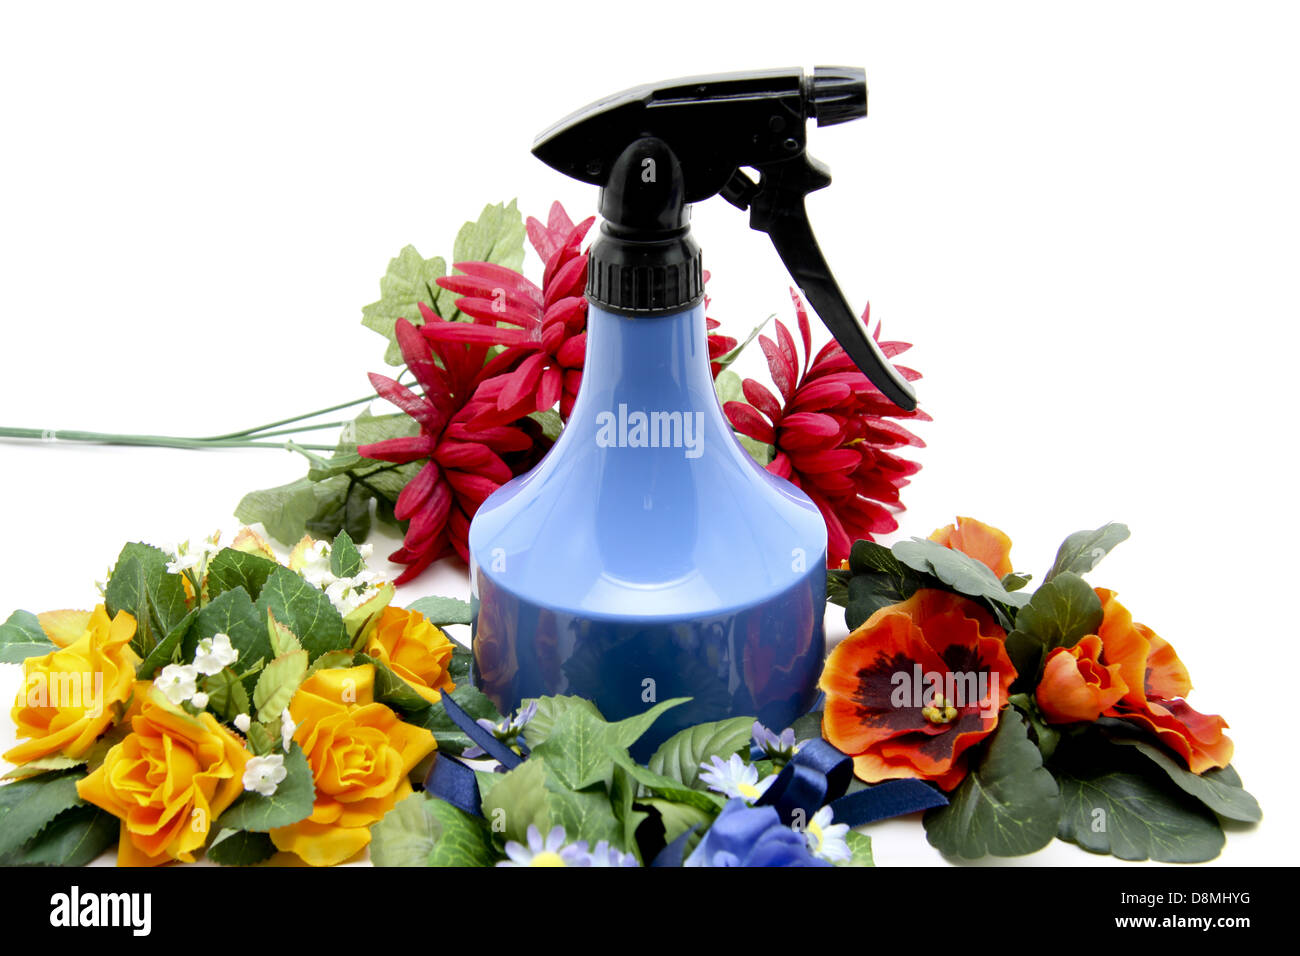 Spraying bottle Stock Photo